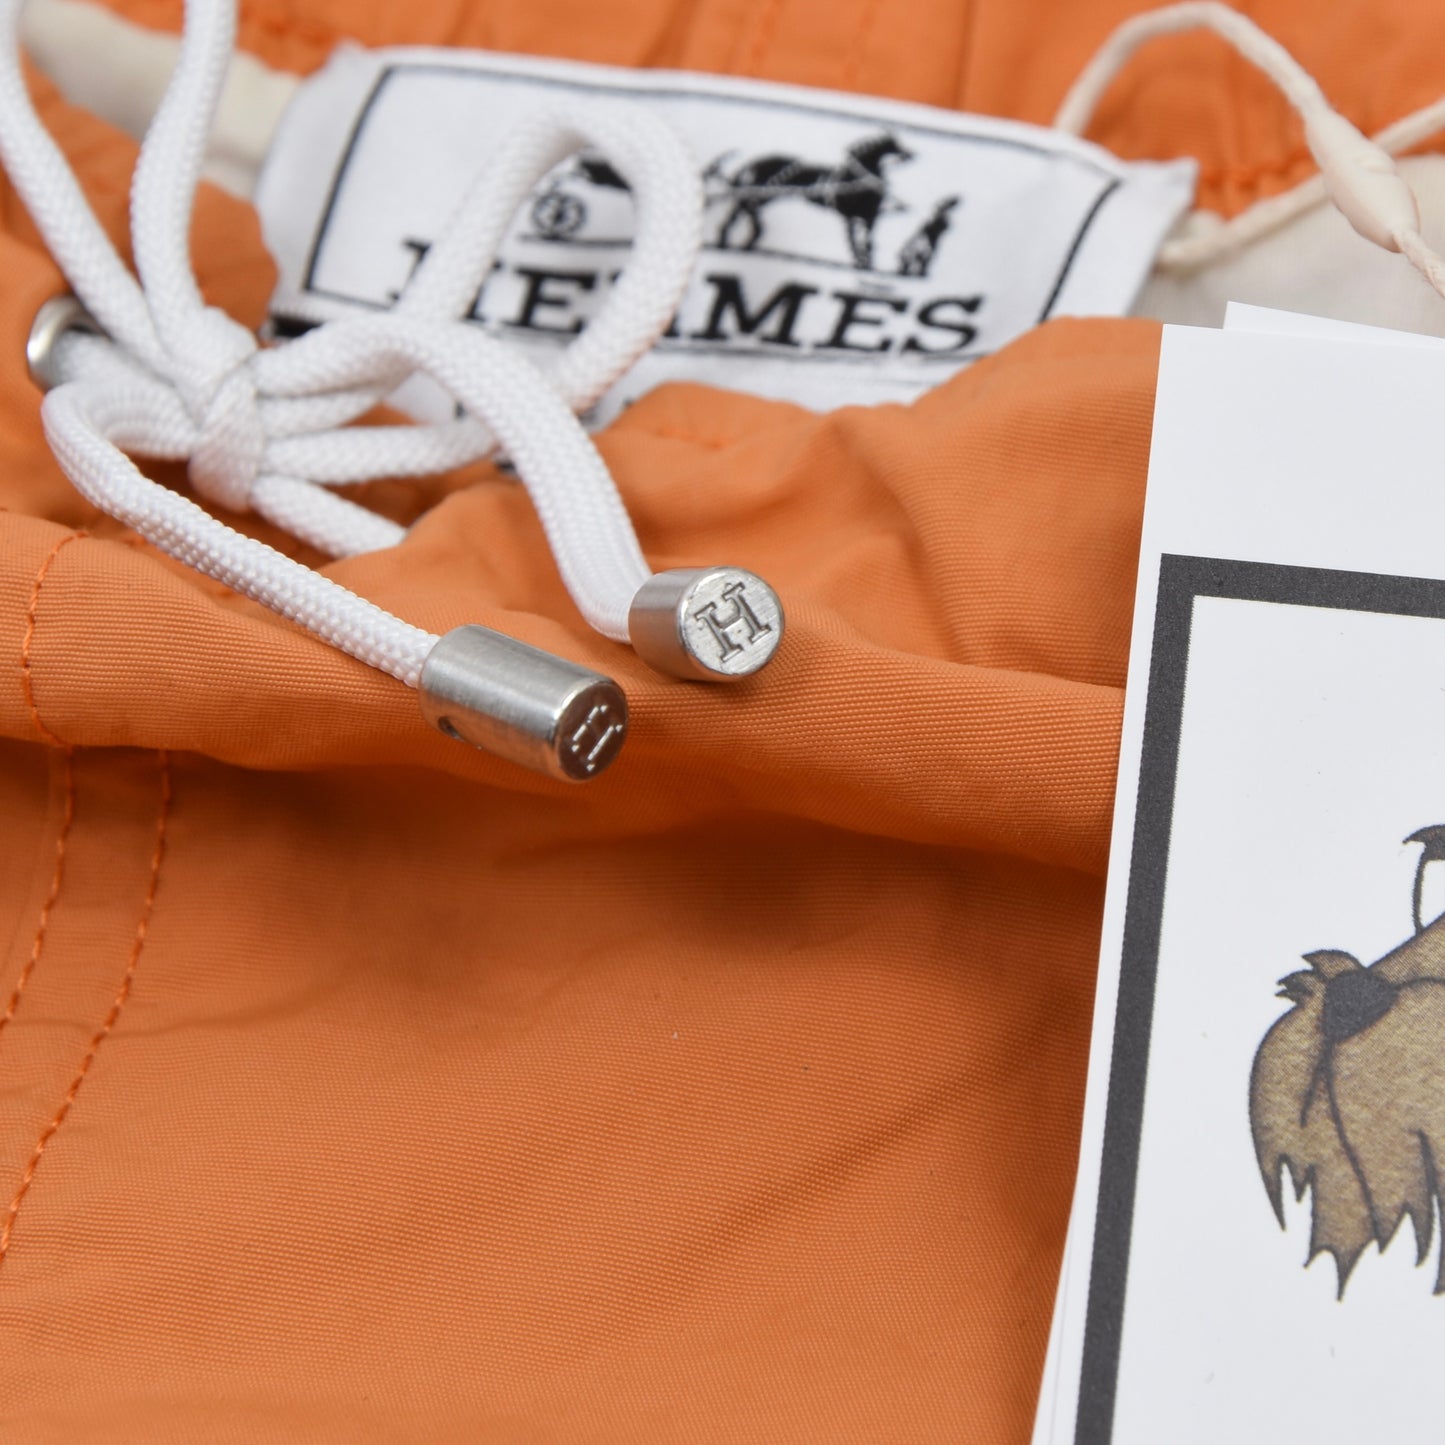 Hermès Paris Swim Trunks Size L - Orange